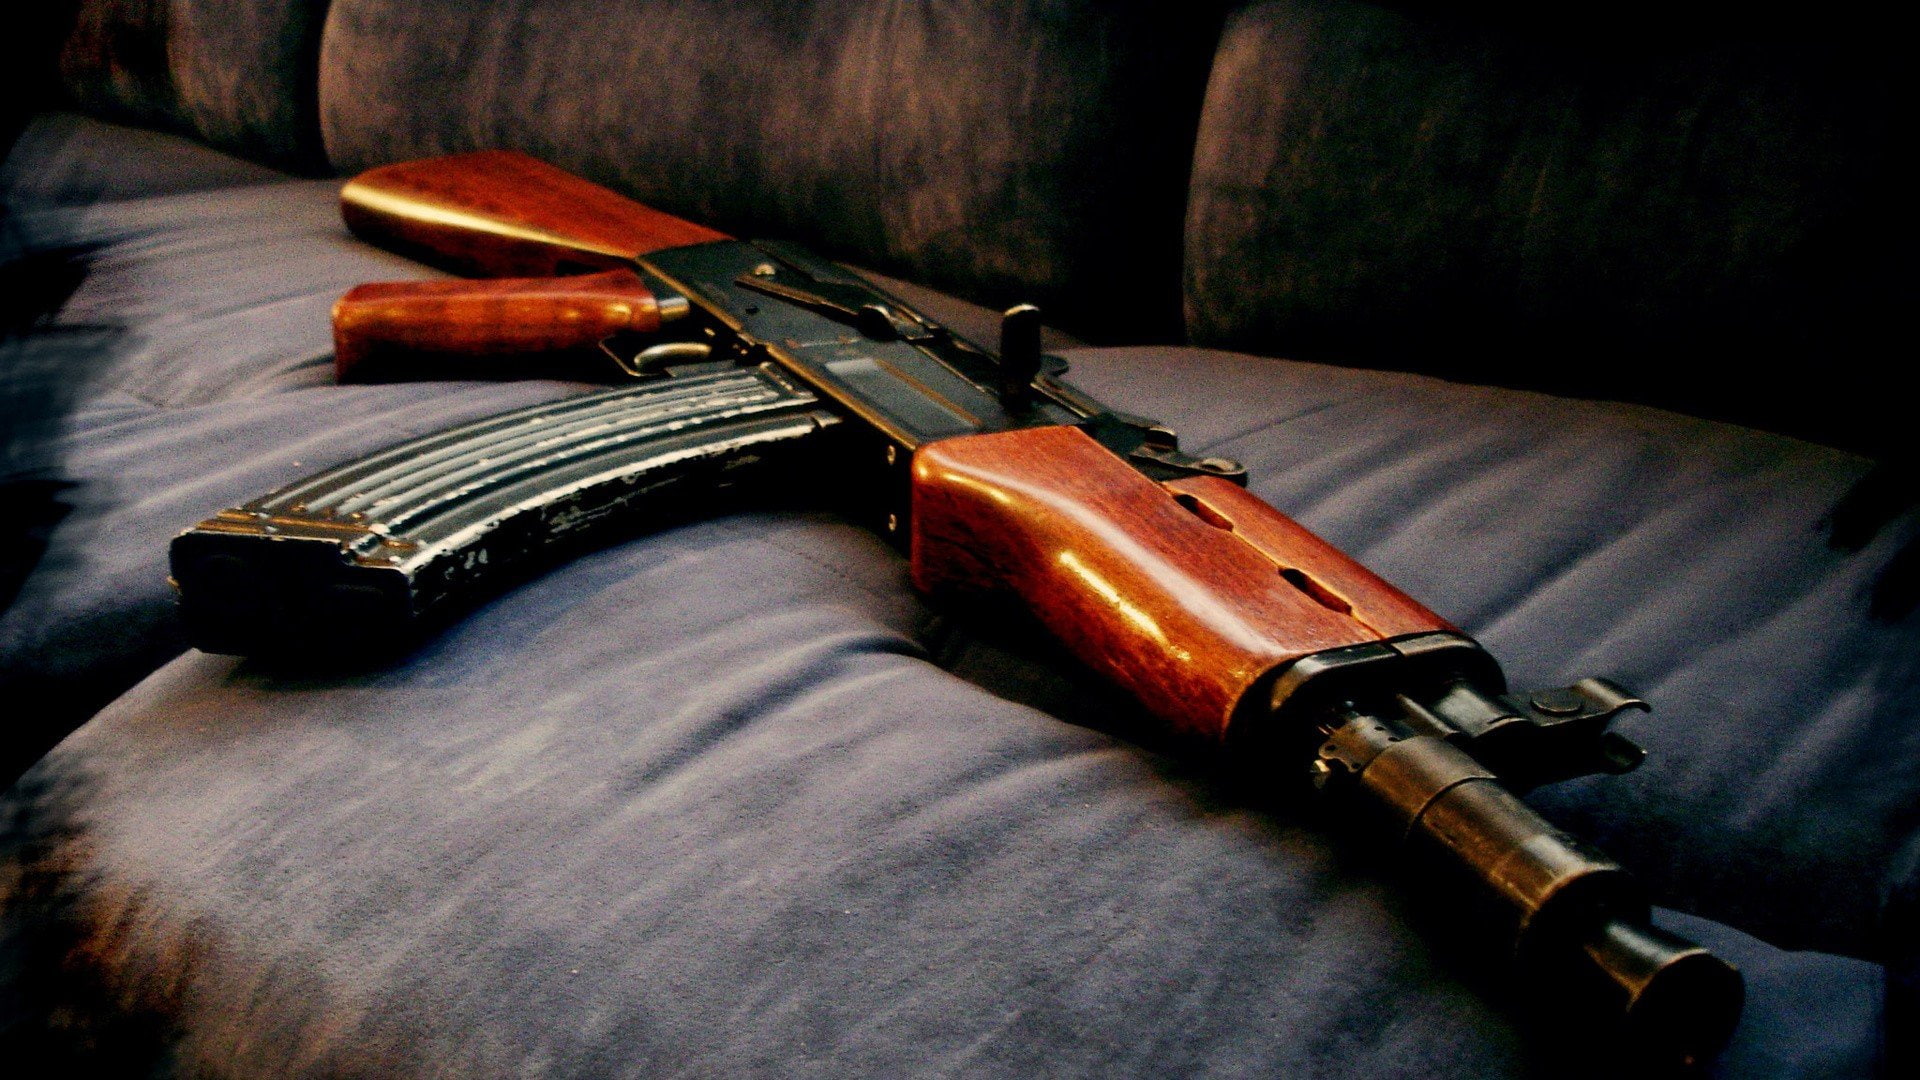 weapon gun dope black aks 74u, music, wood - material, indoors